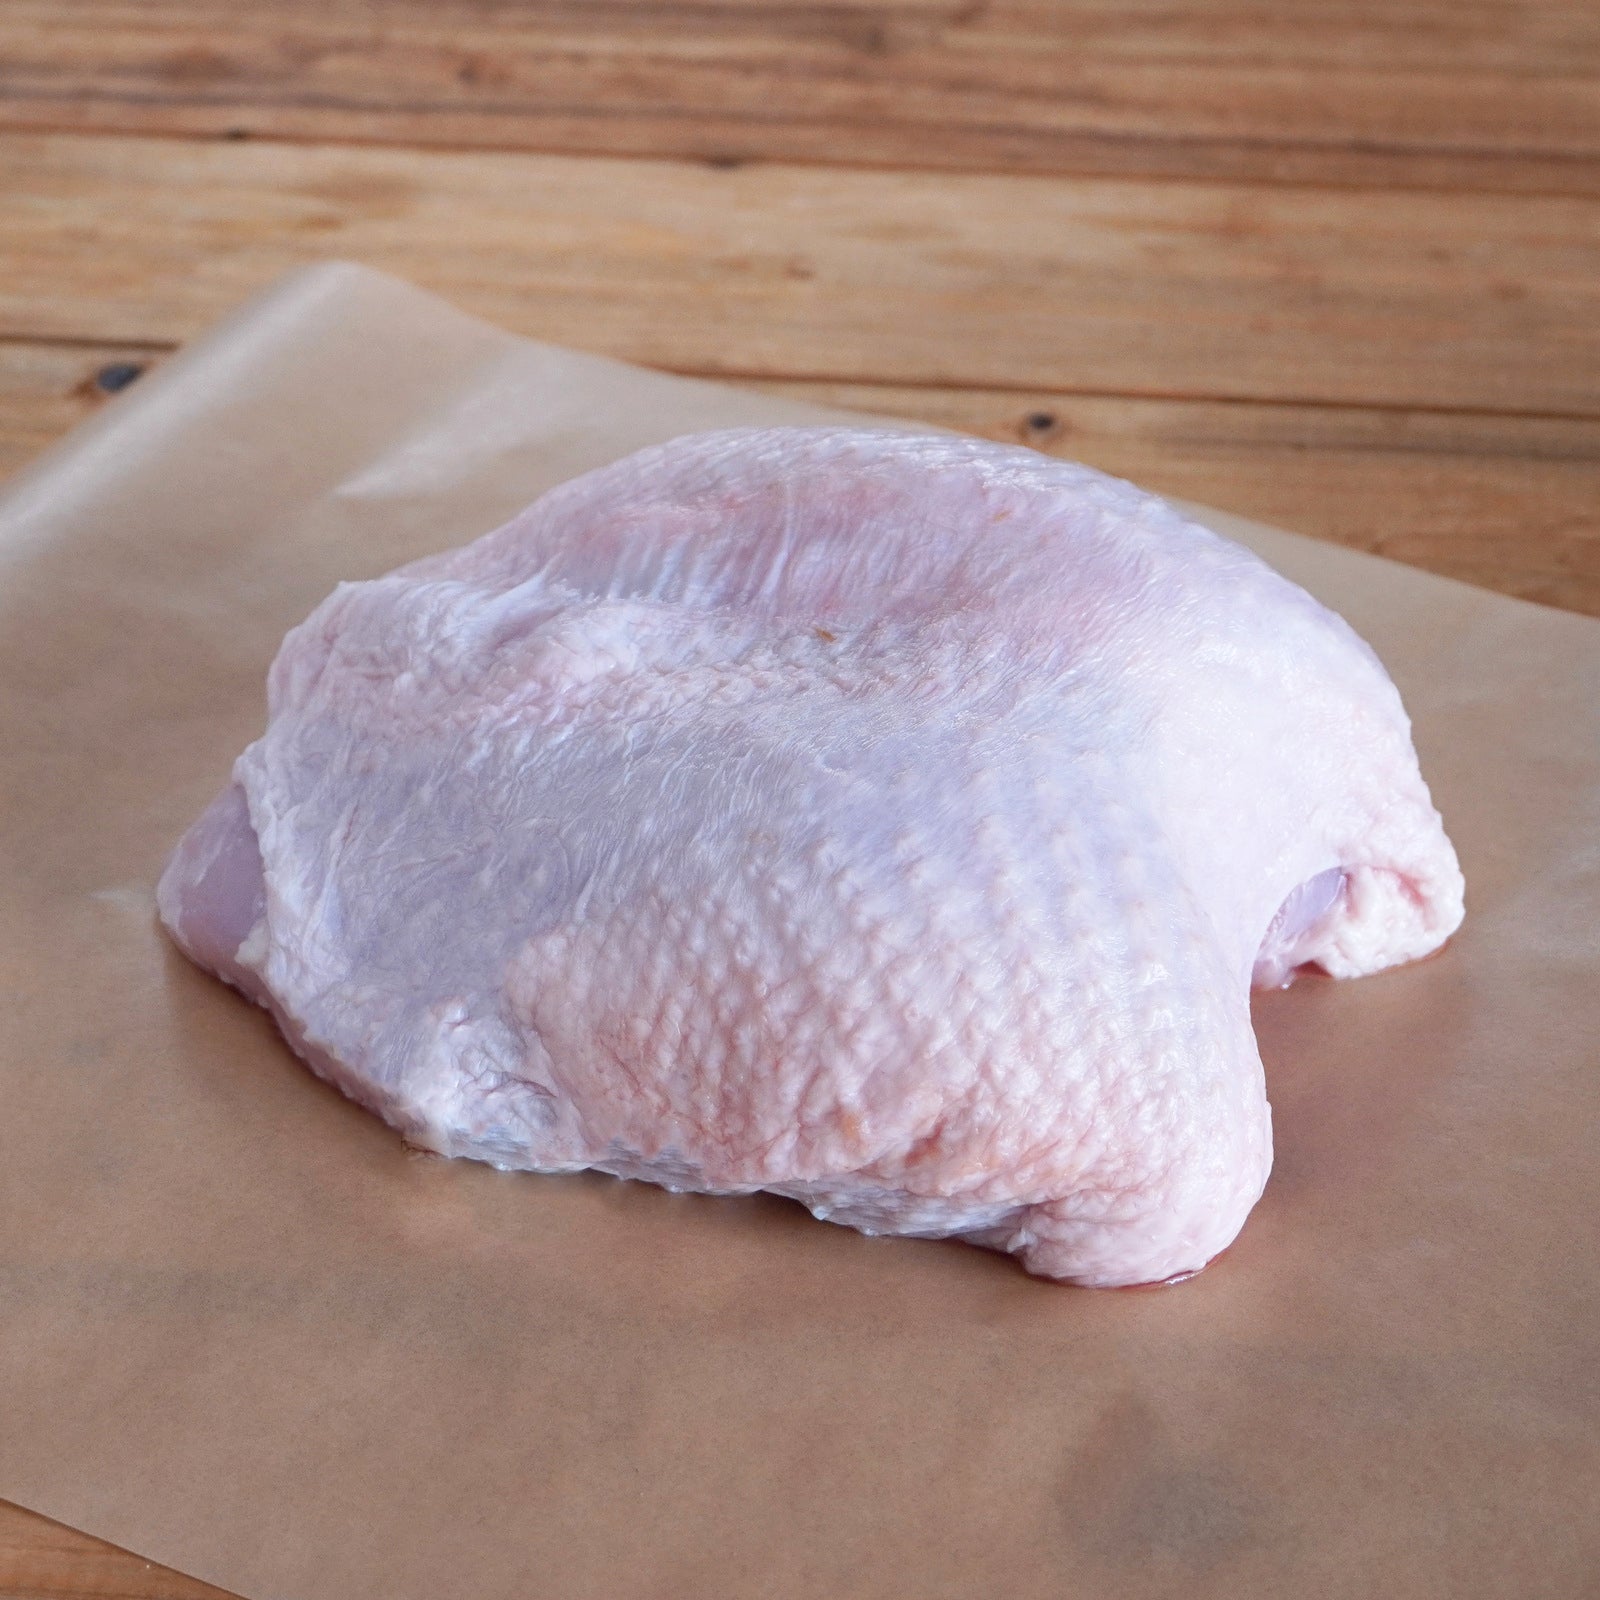 Free-Range Skin-On Whole Turkey Breast from New Zealand (1.4kg) - Horizon Farms